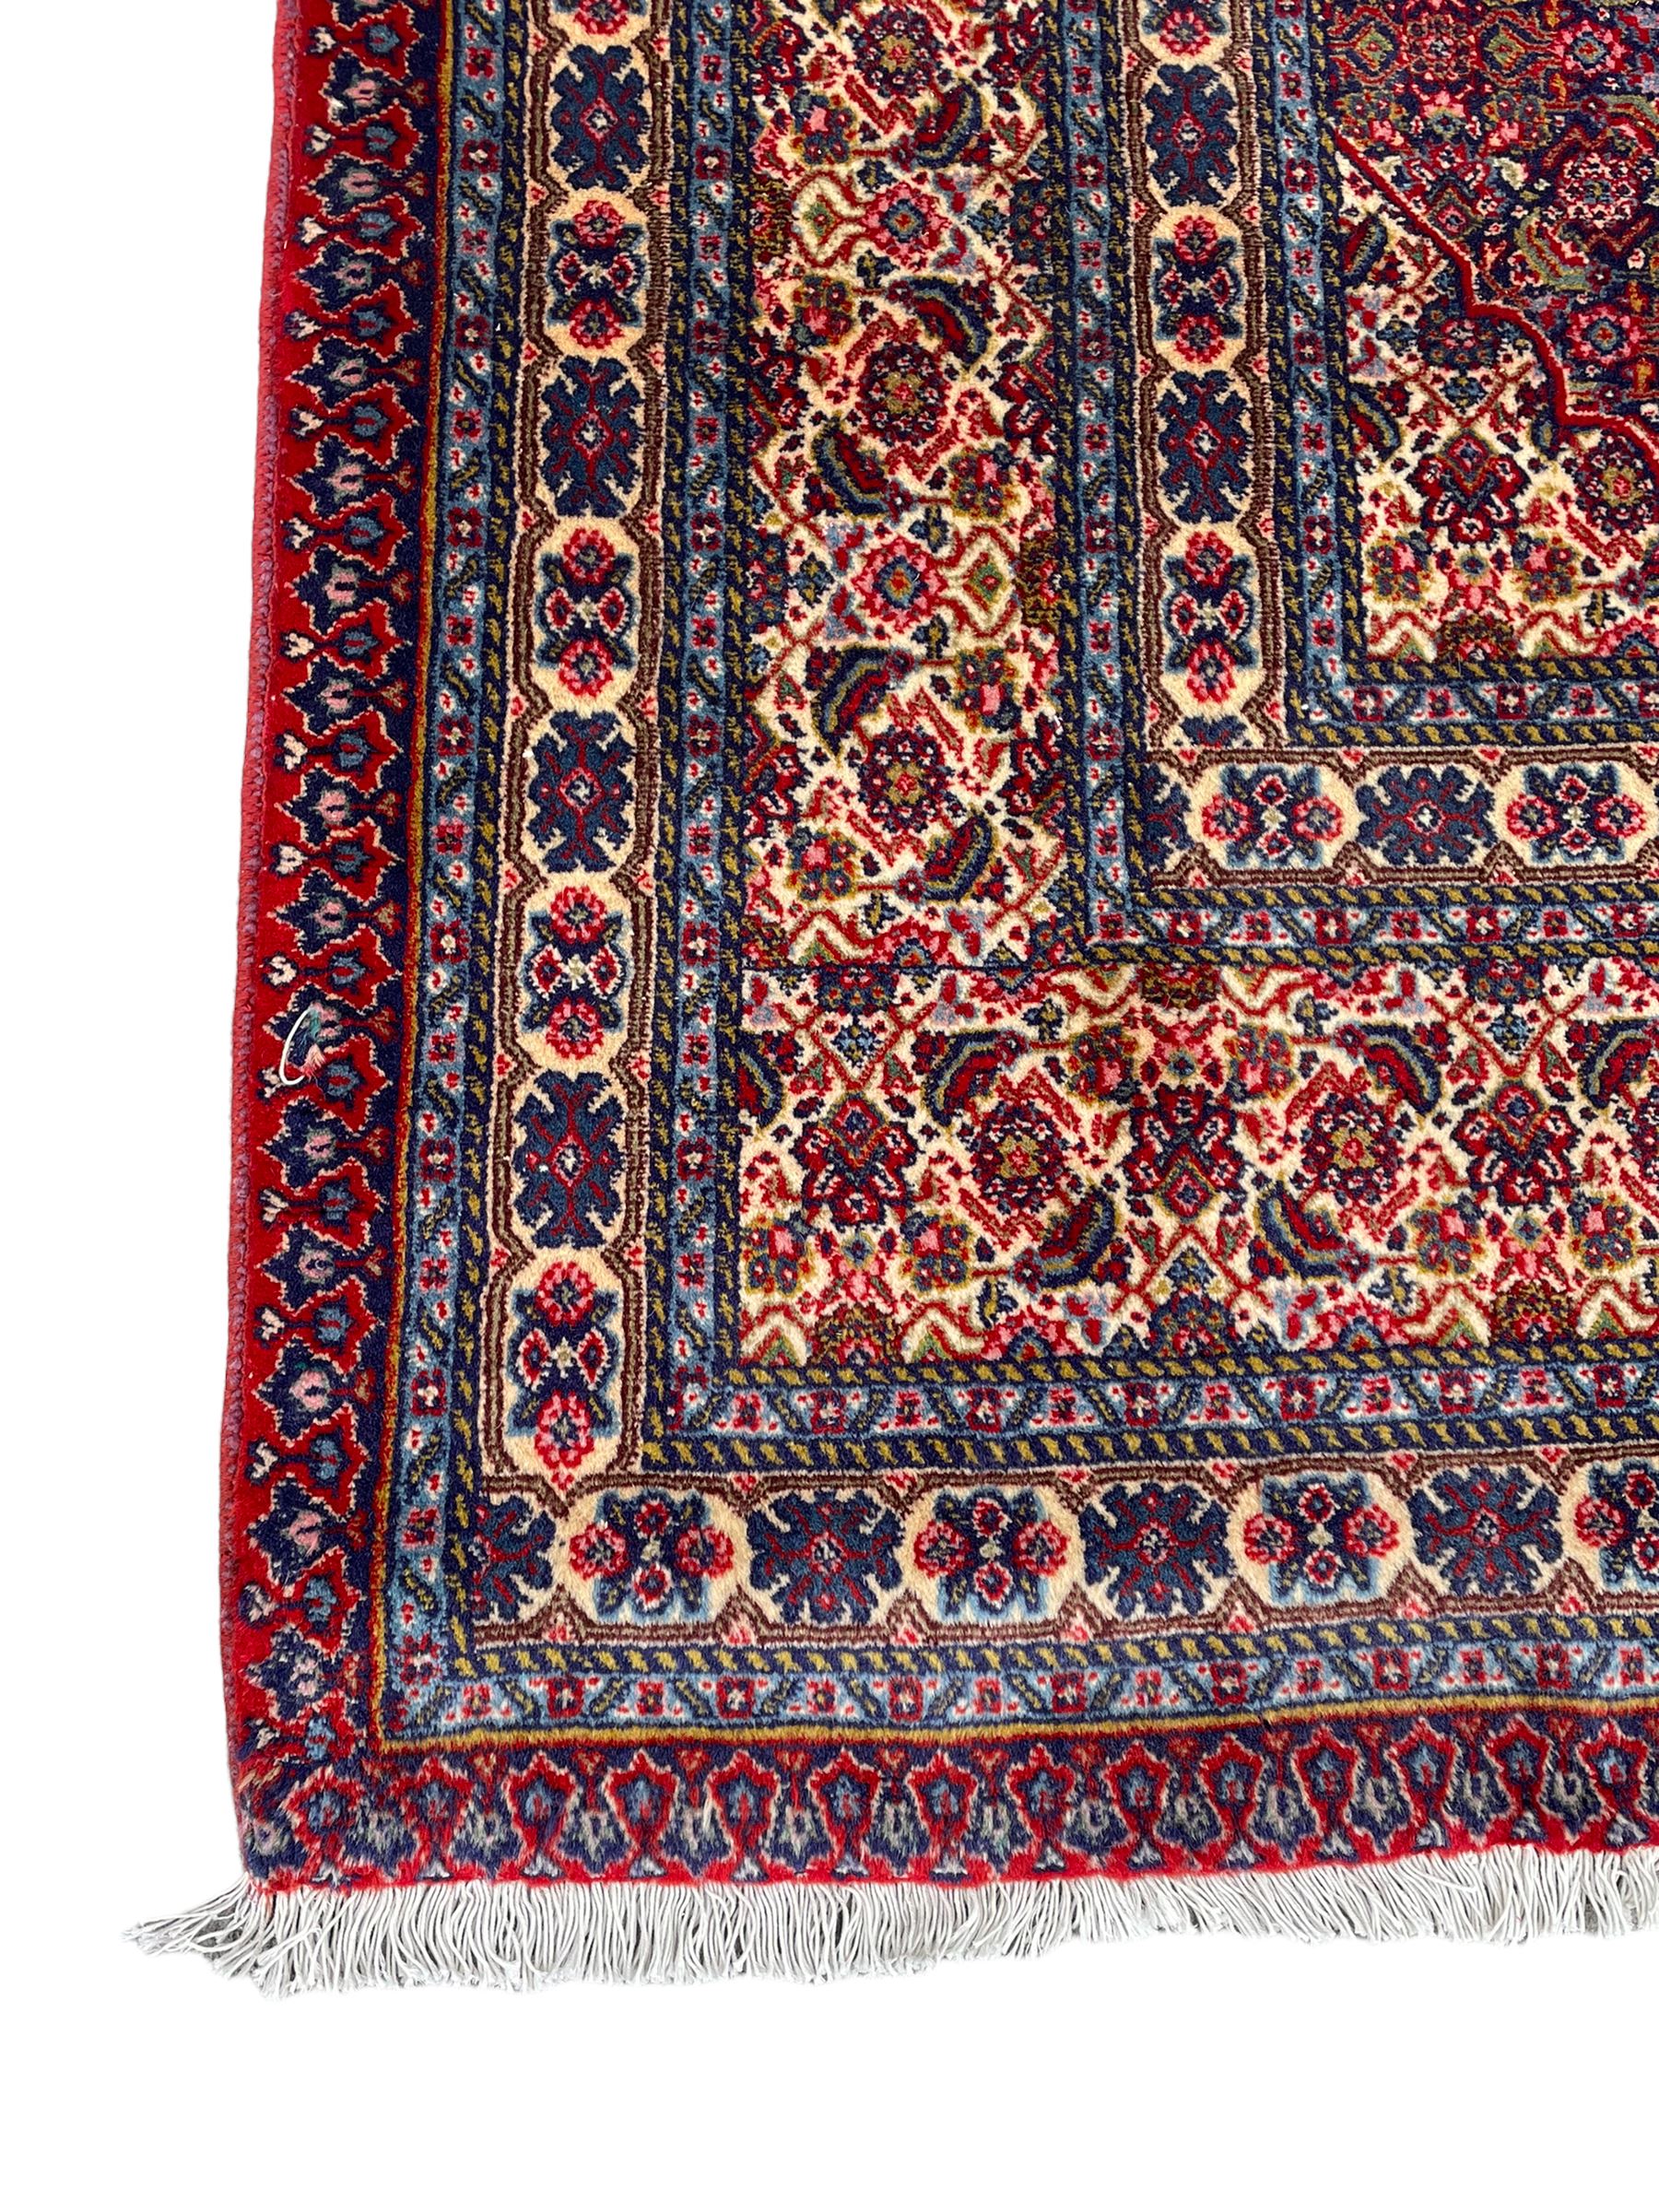 Fine Persian Bijar rug - Image 3 of 10